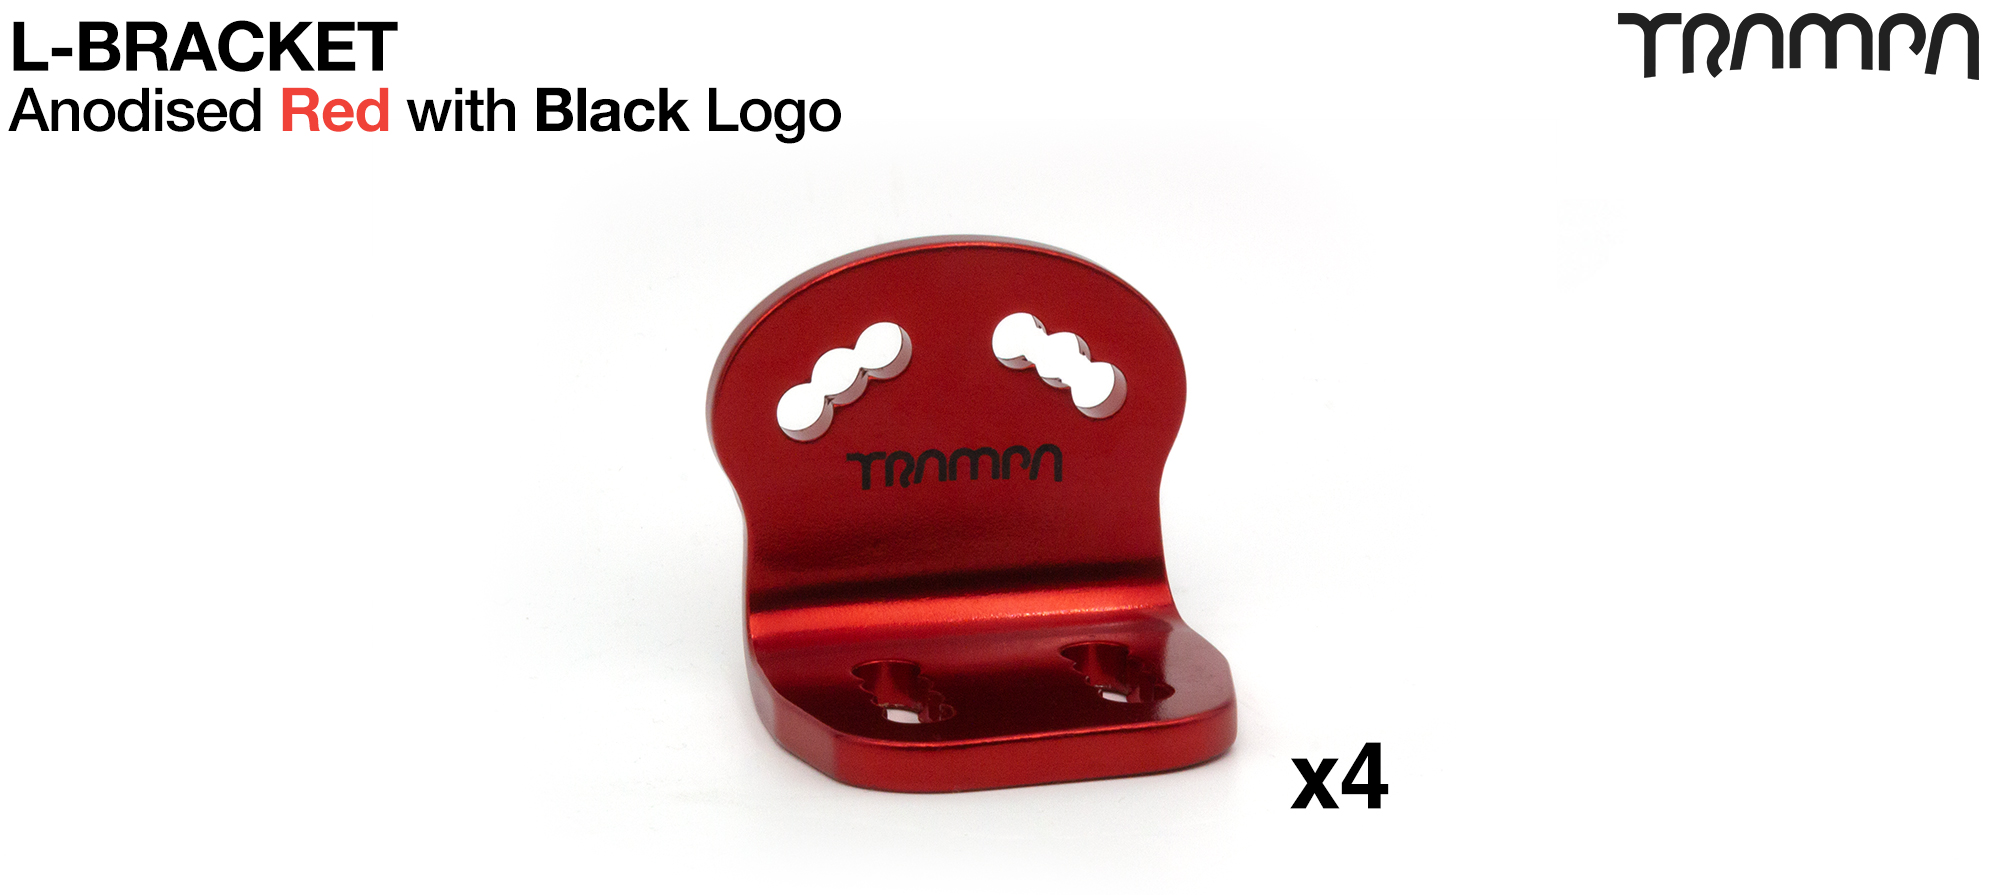 L Bracket - Anodised RED with BLACK logo x4